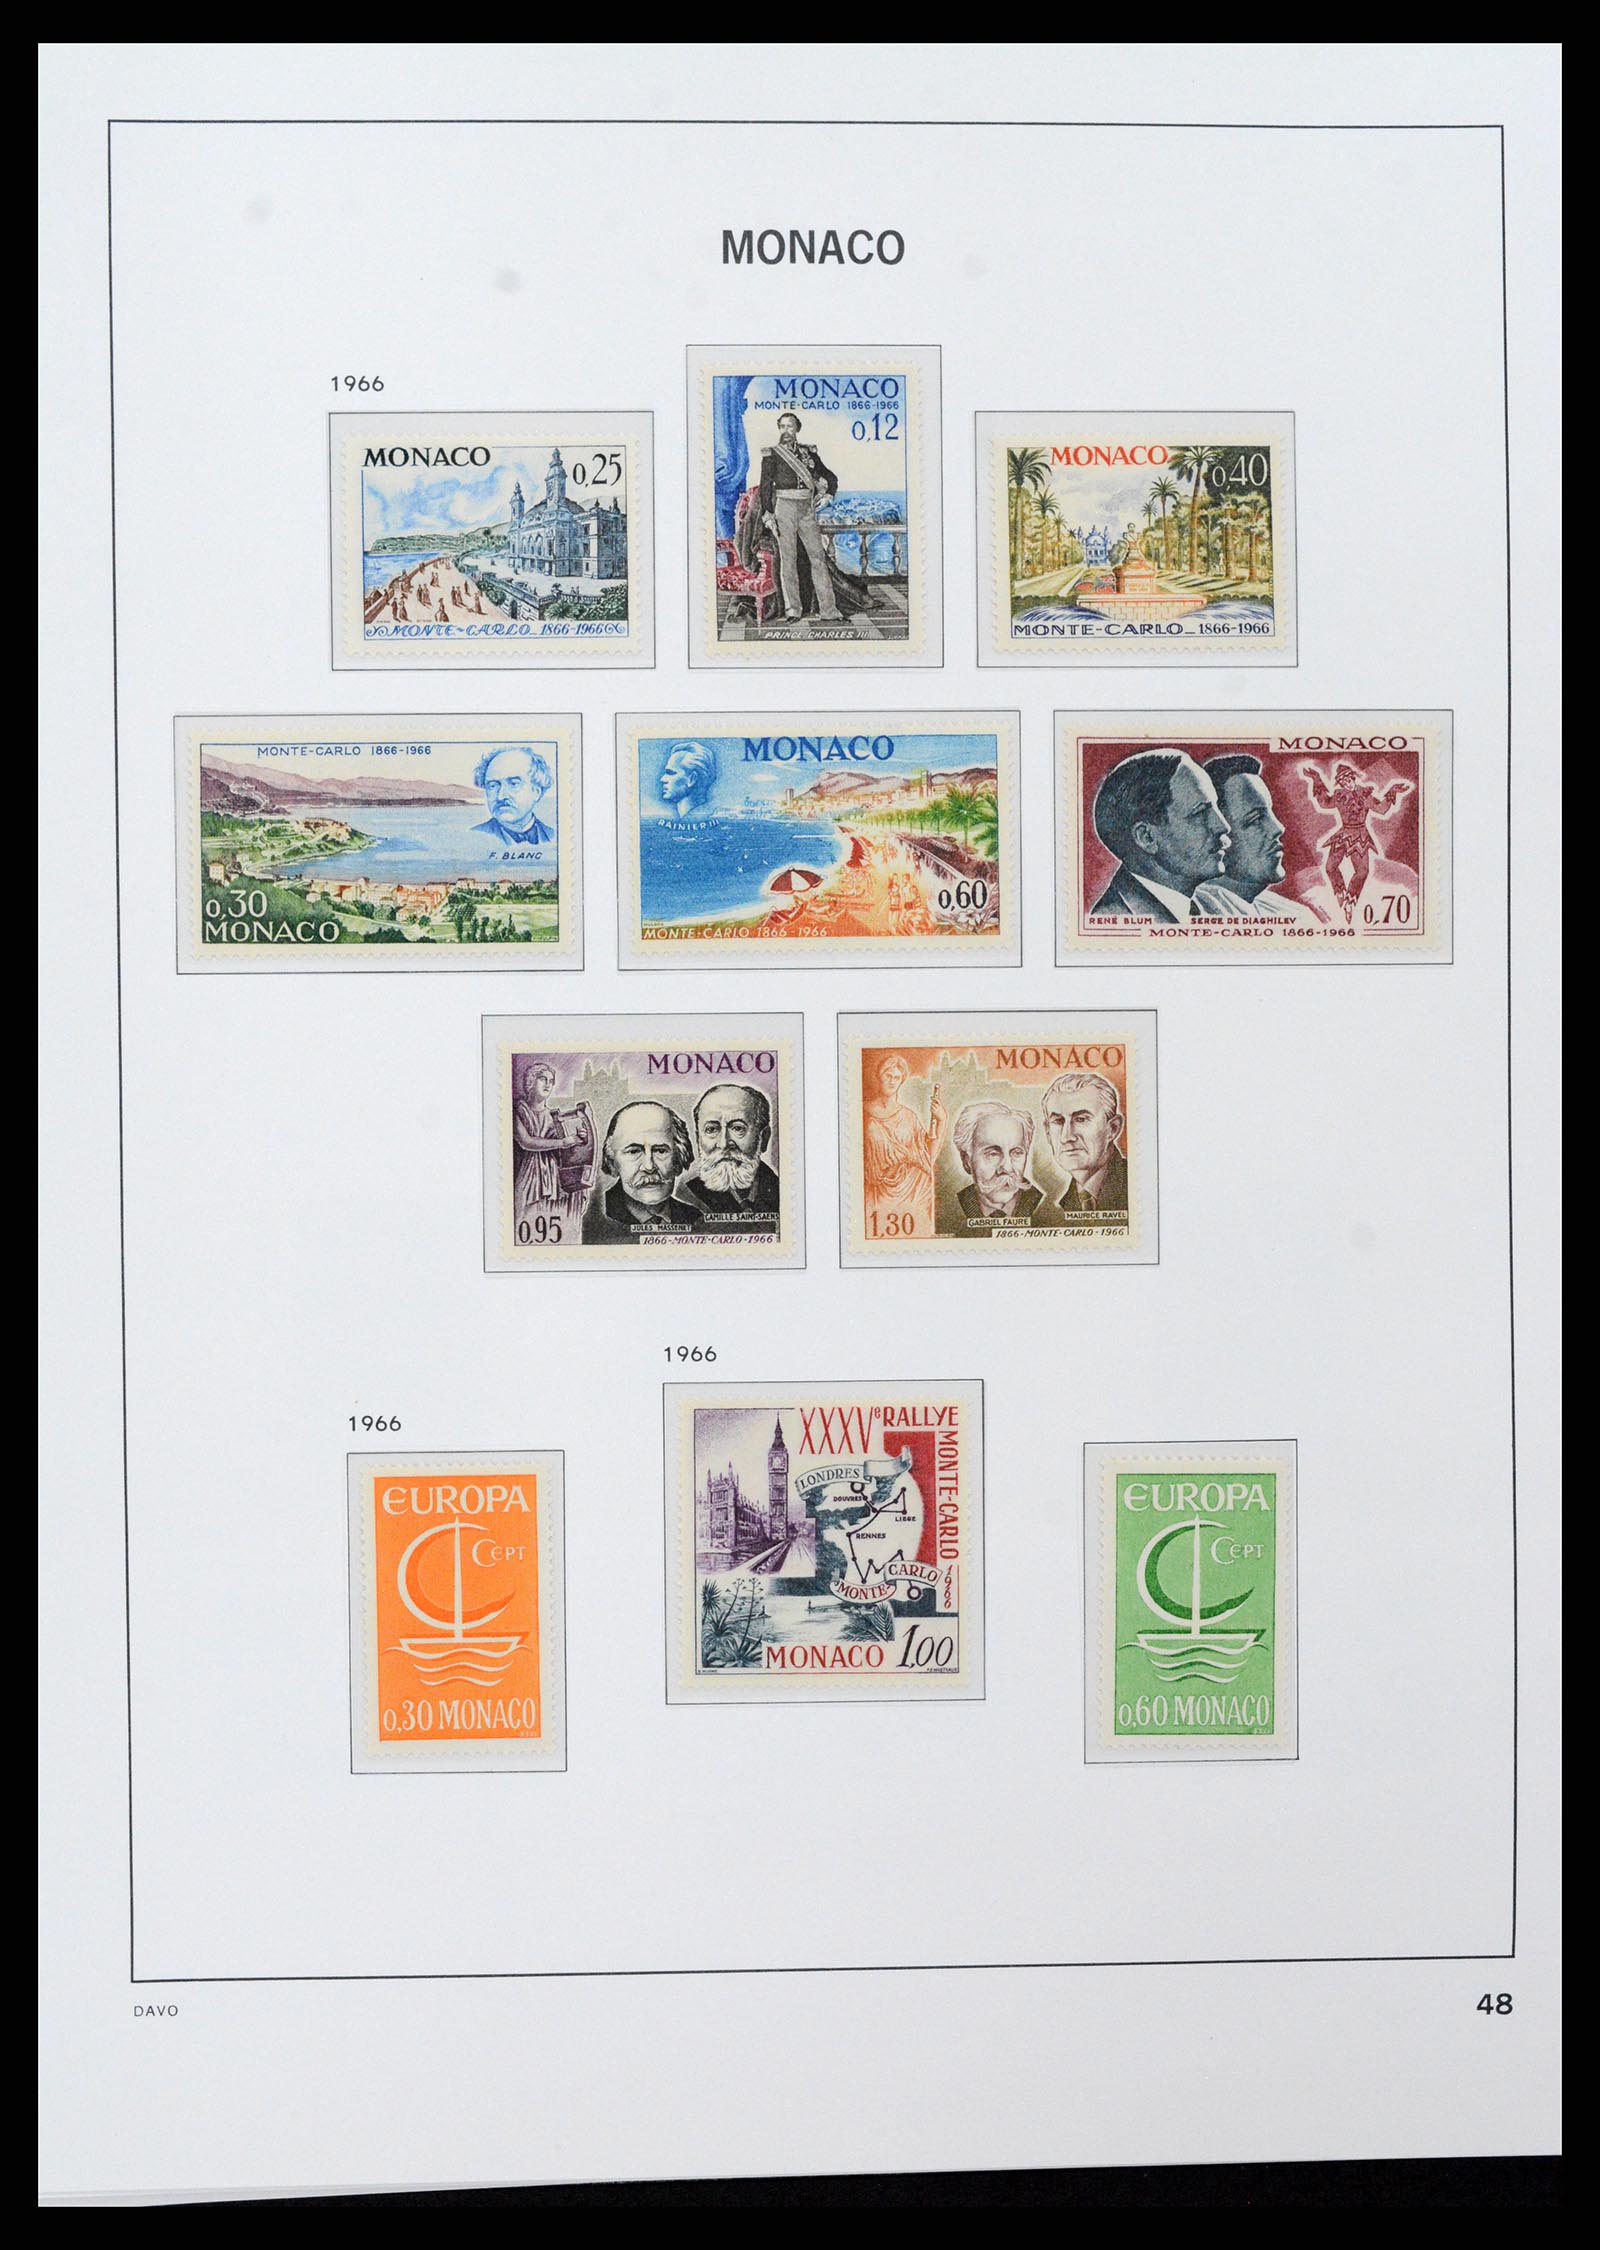 37279 048 - Stamp collection 37279 Monaco 1885-1969.